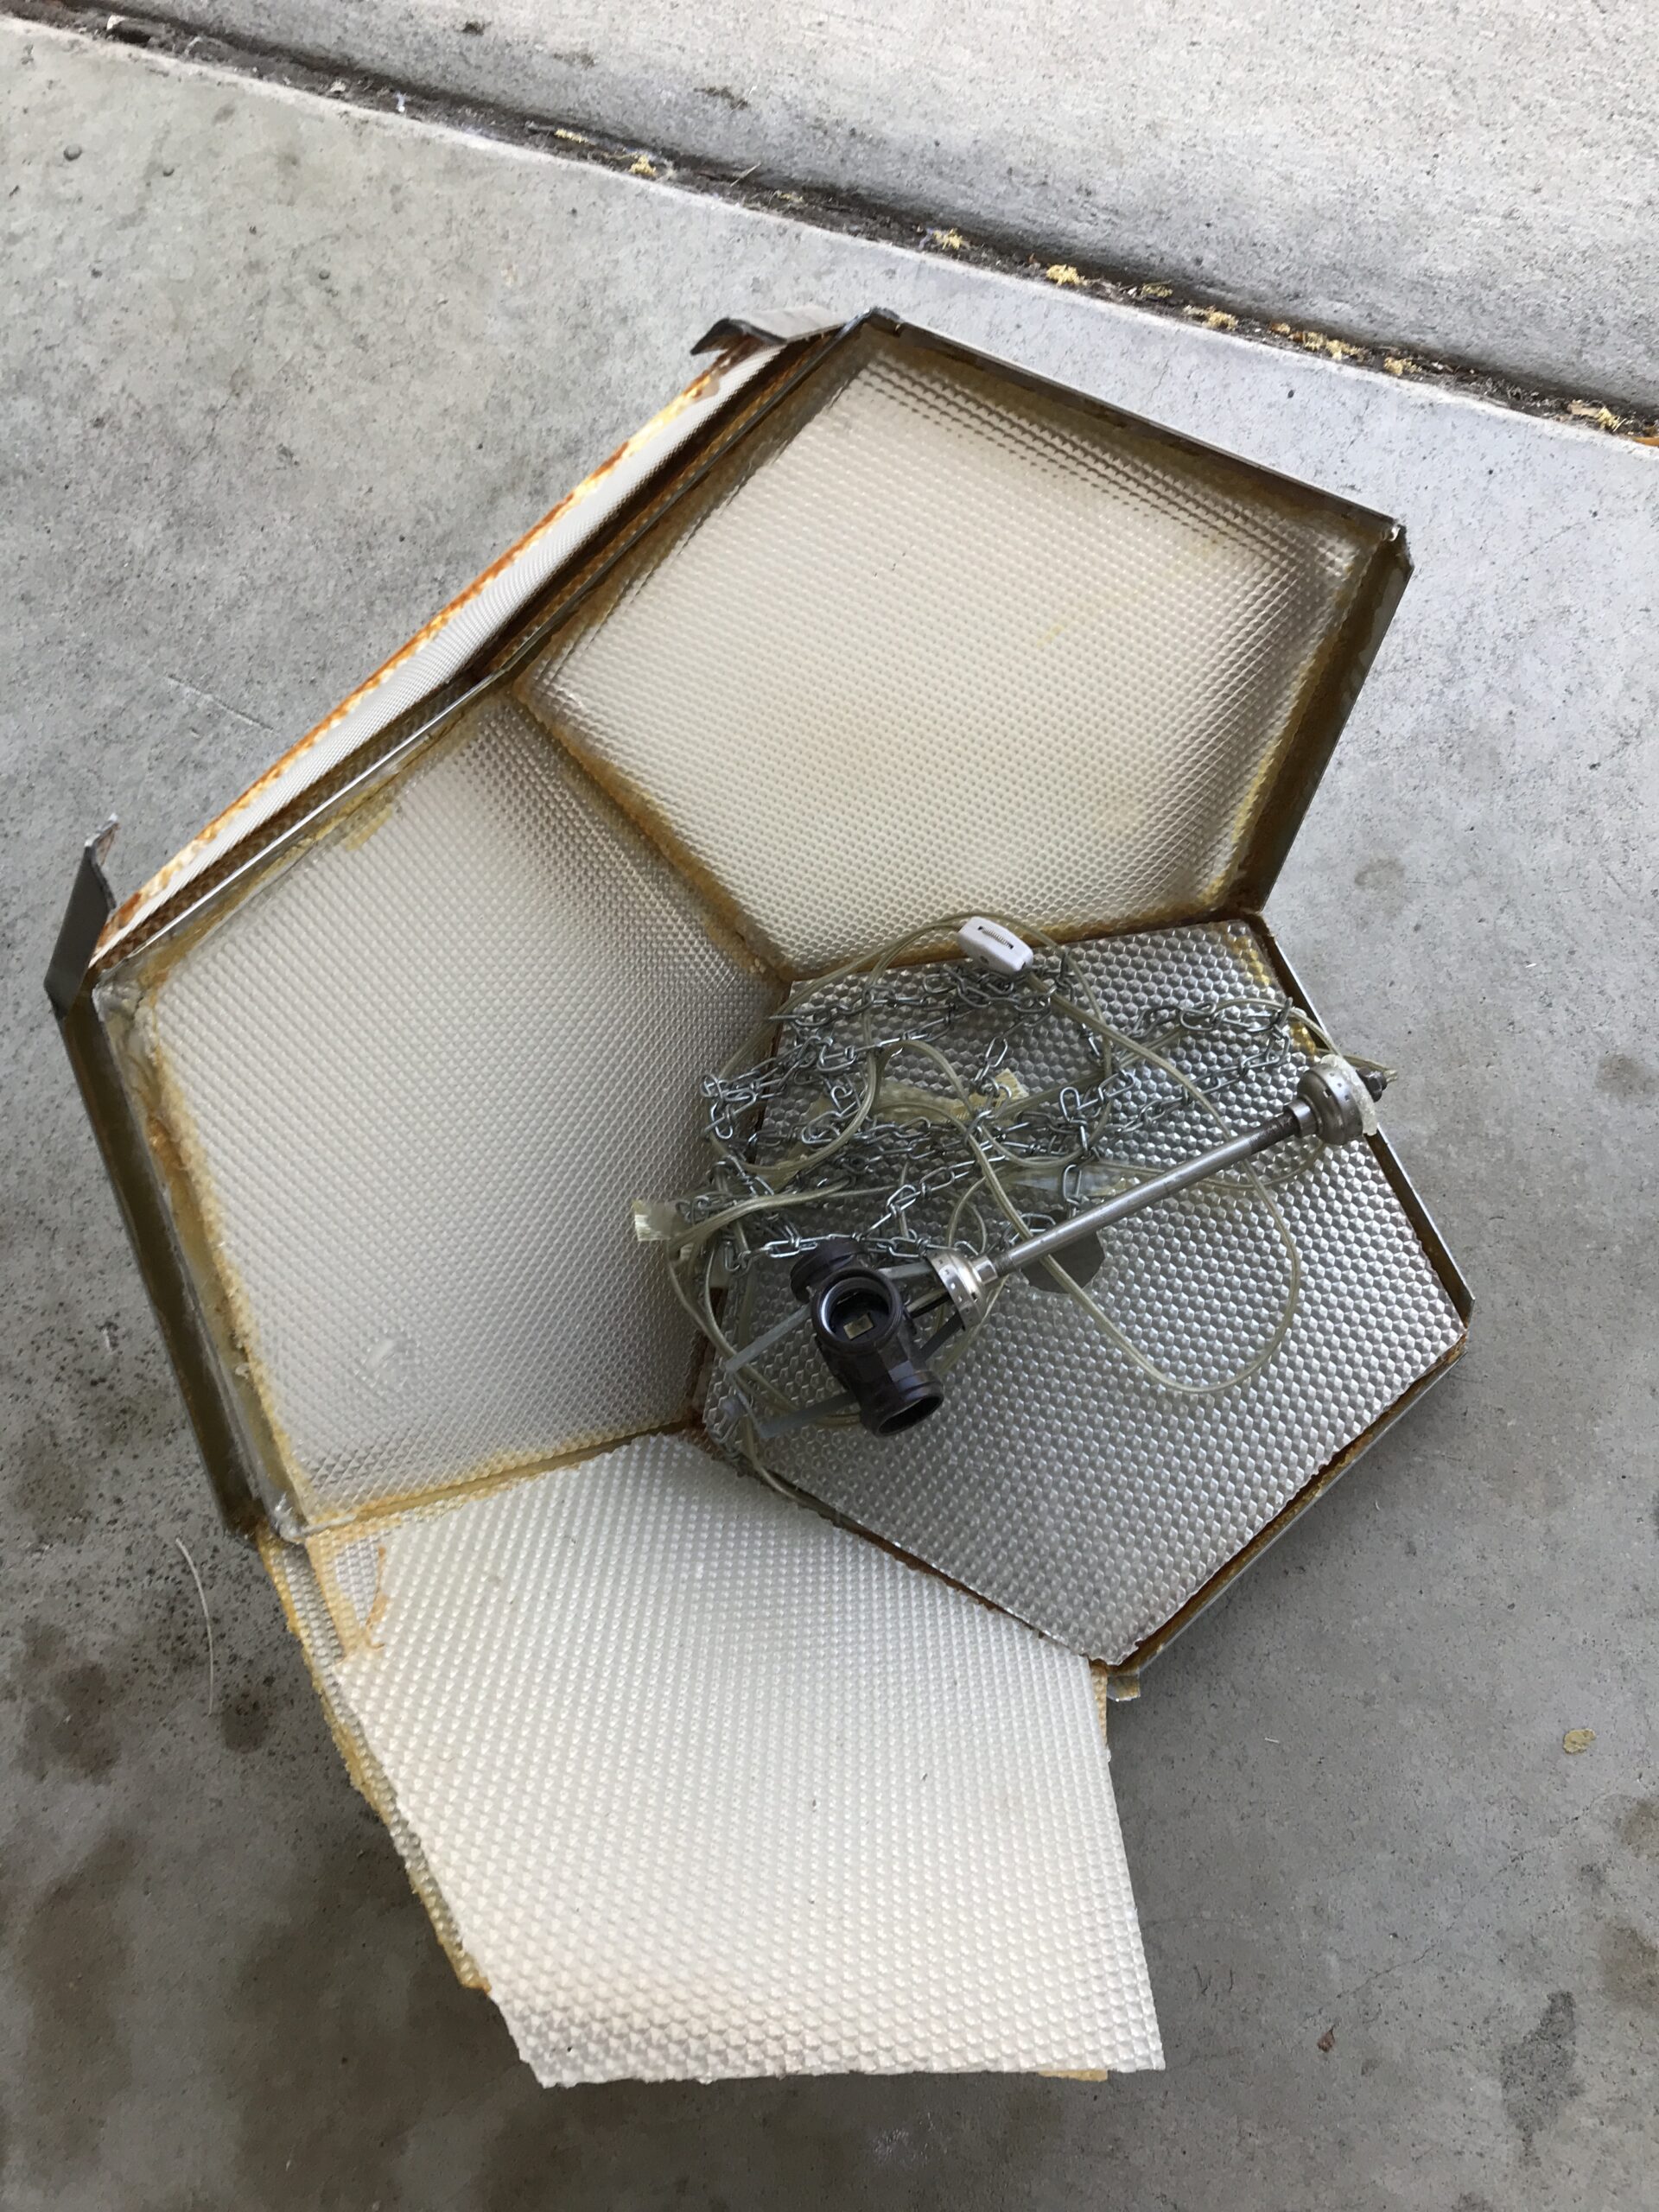 dodecahedron lamp (needs repair)